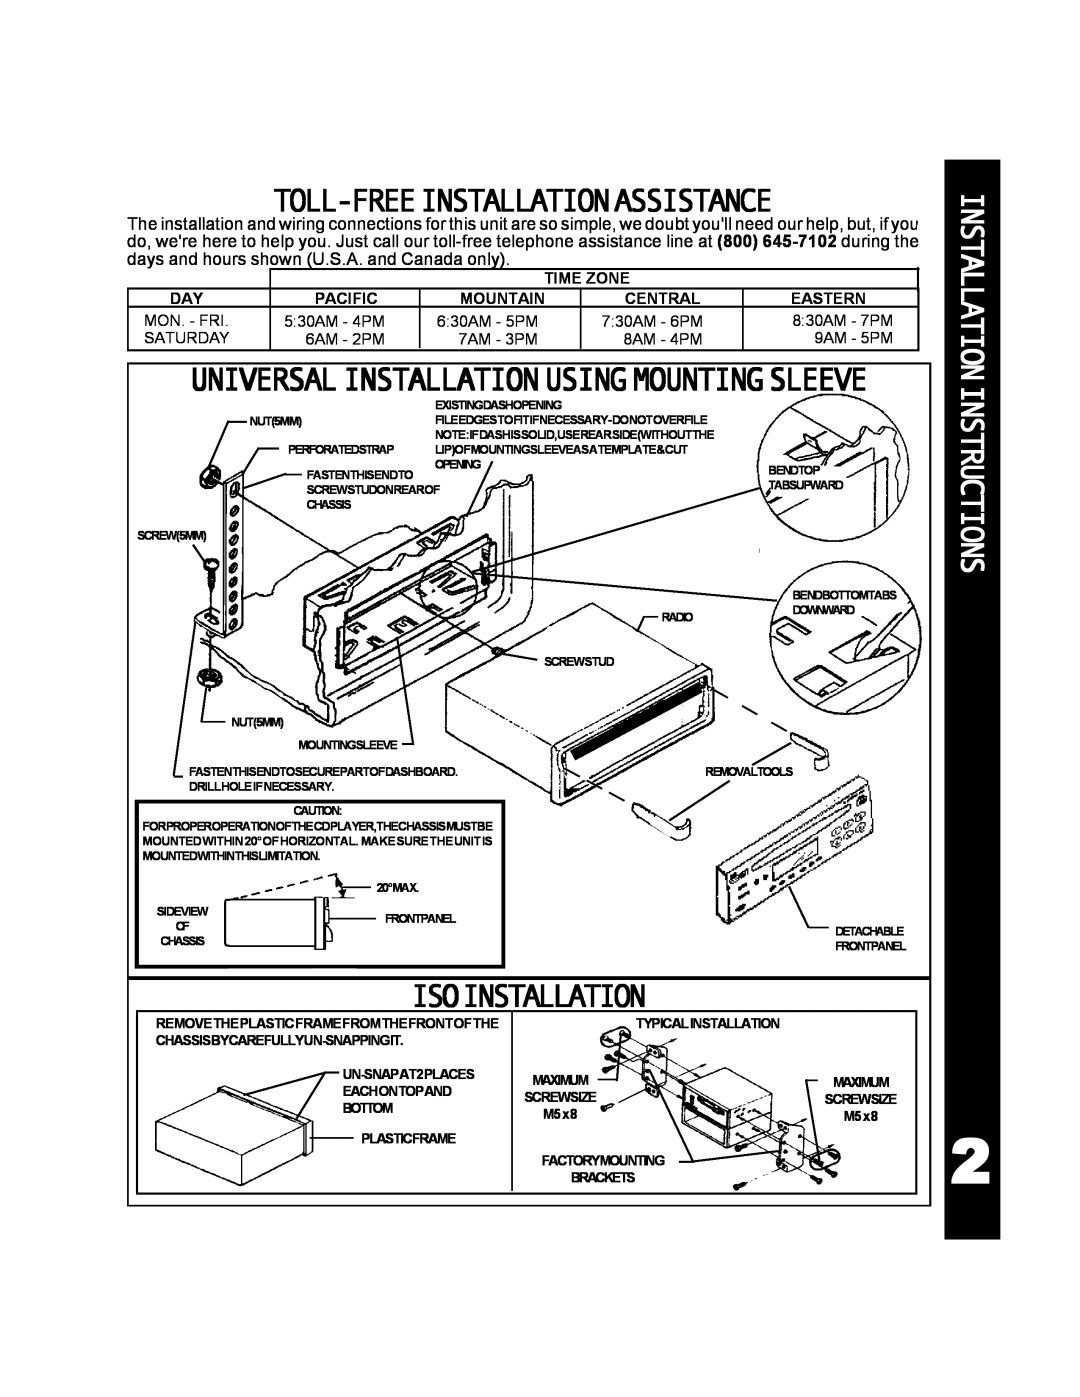 Audiovox ACD-25 manual Toll-Freeinstallationassistance, Isoinstallation, Installationinstructions 